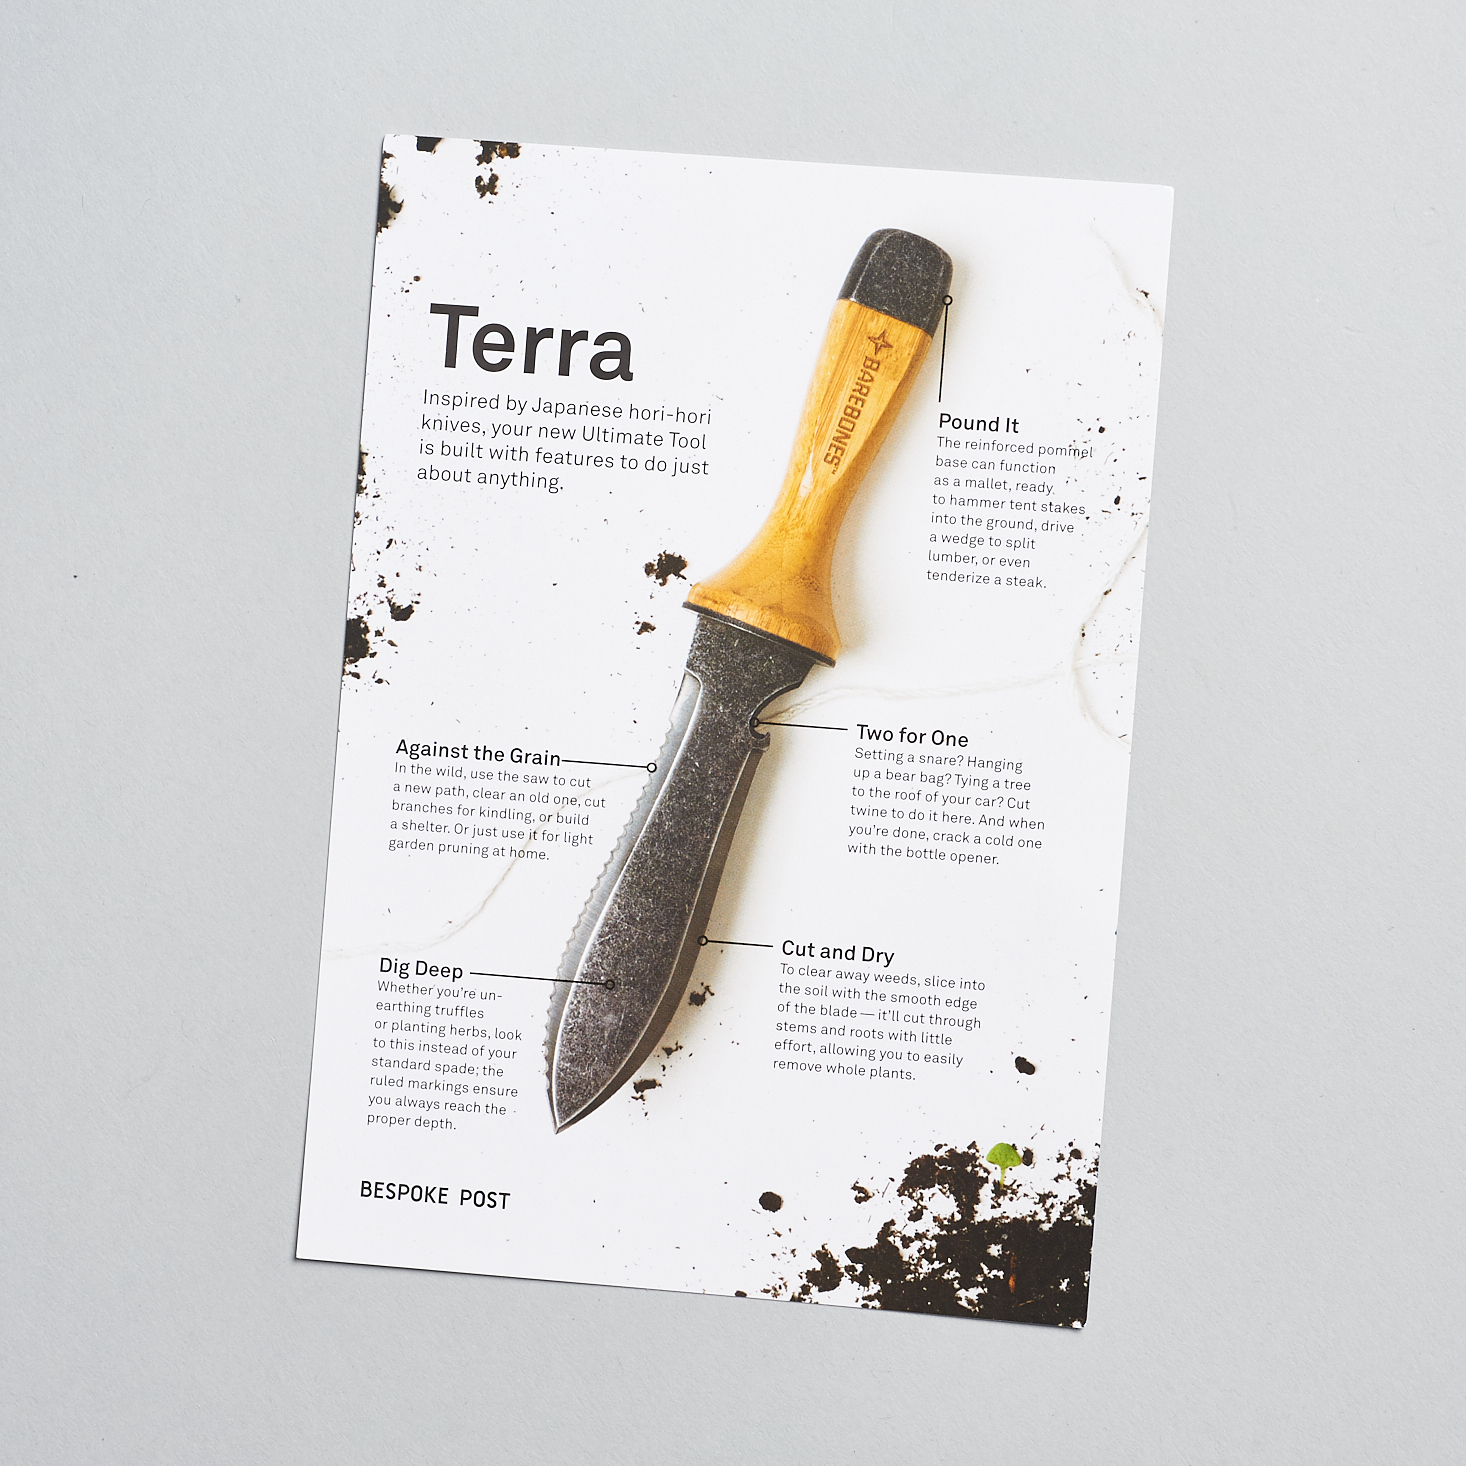 Terra Info card